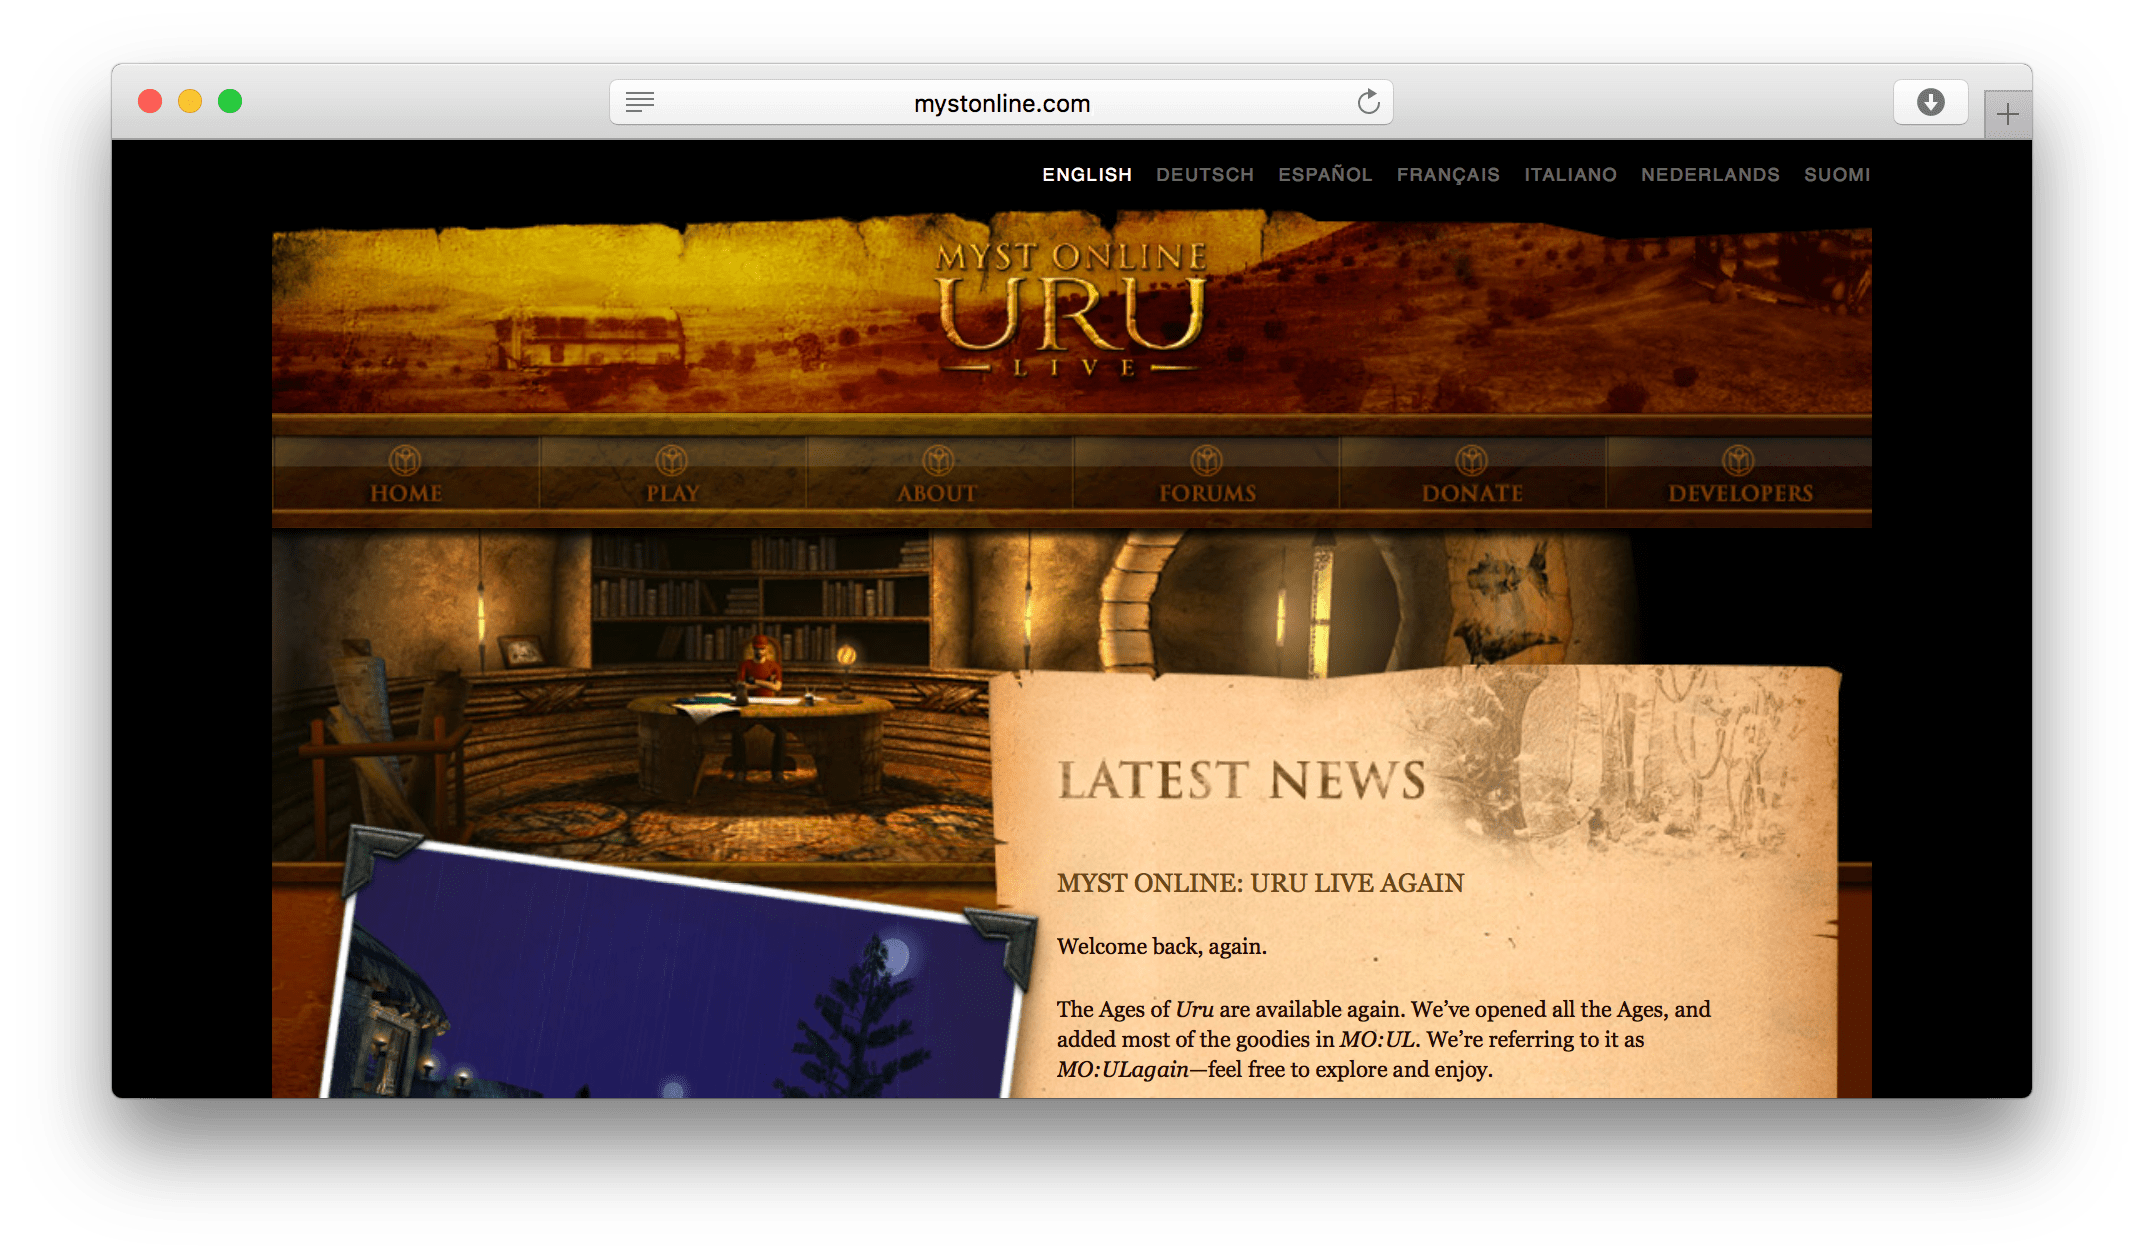 Myst Online website screenshot